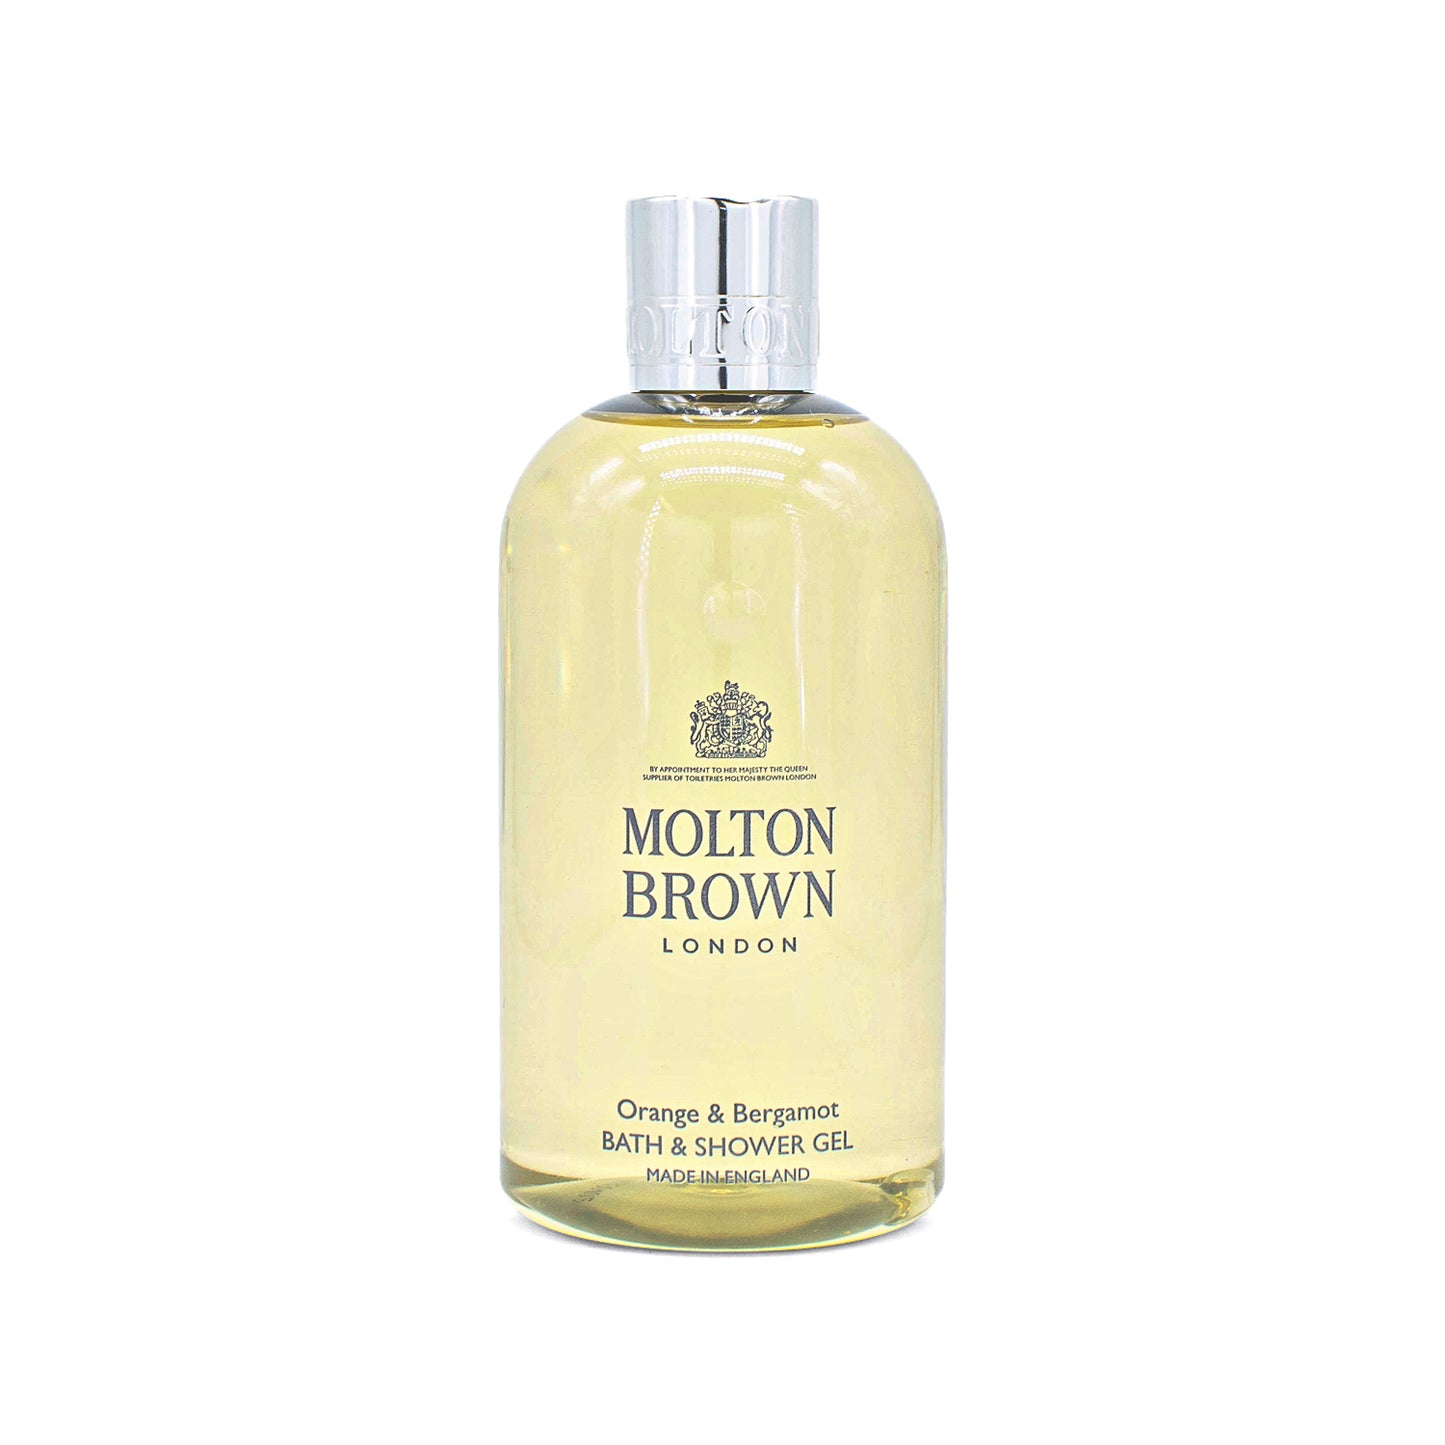 Molton Brown London Orange & Bergamot Bath & Shower Gel 10fl oz - New